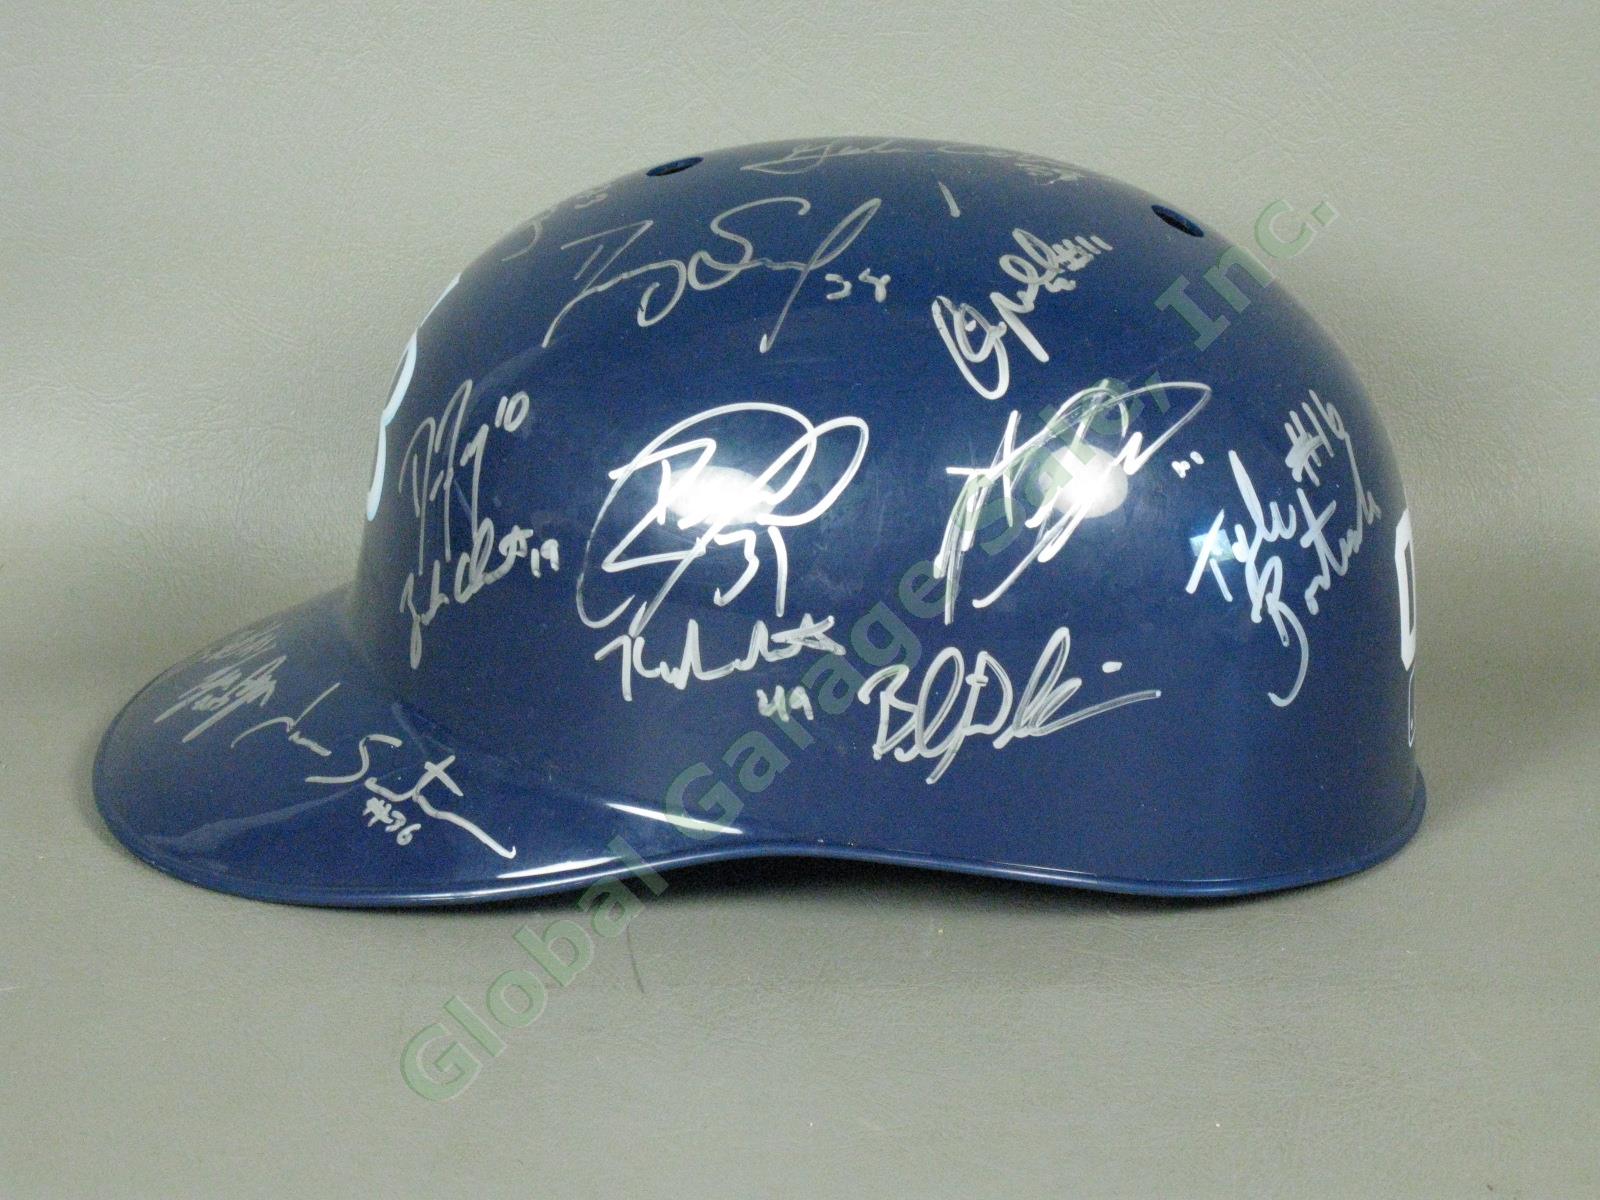 2009 Hudson Valley Renegades Team Signed Baseball Helmet NYPL Tampa Bay Rays NR 3